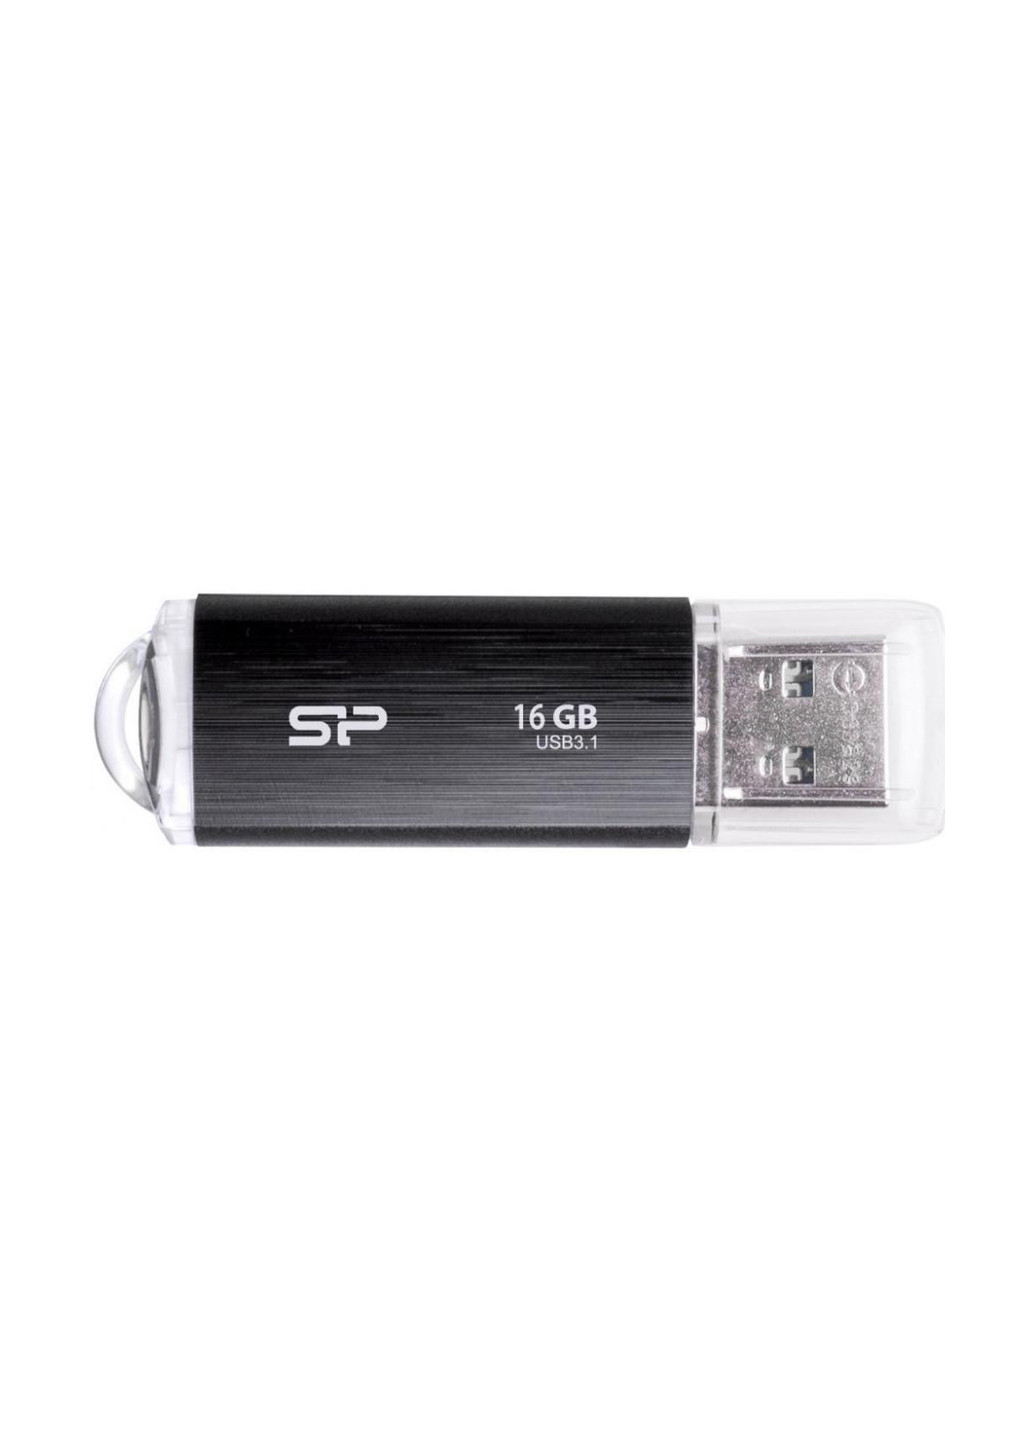 Флеш память USB Blaze B02 16GB USB 3.0 Black (SP016GBUF3B02V1K) Silicon Power флеш память usb silicon power blaze b02 16gb usb 3.0 black (sp016gbuf3b02v1k) (132007719)